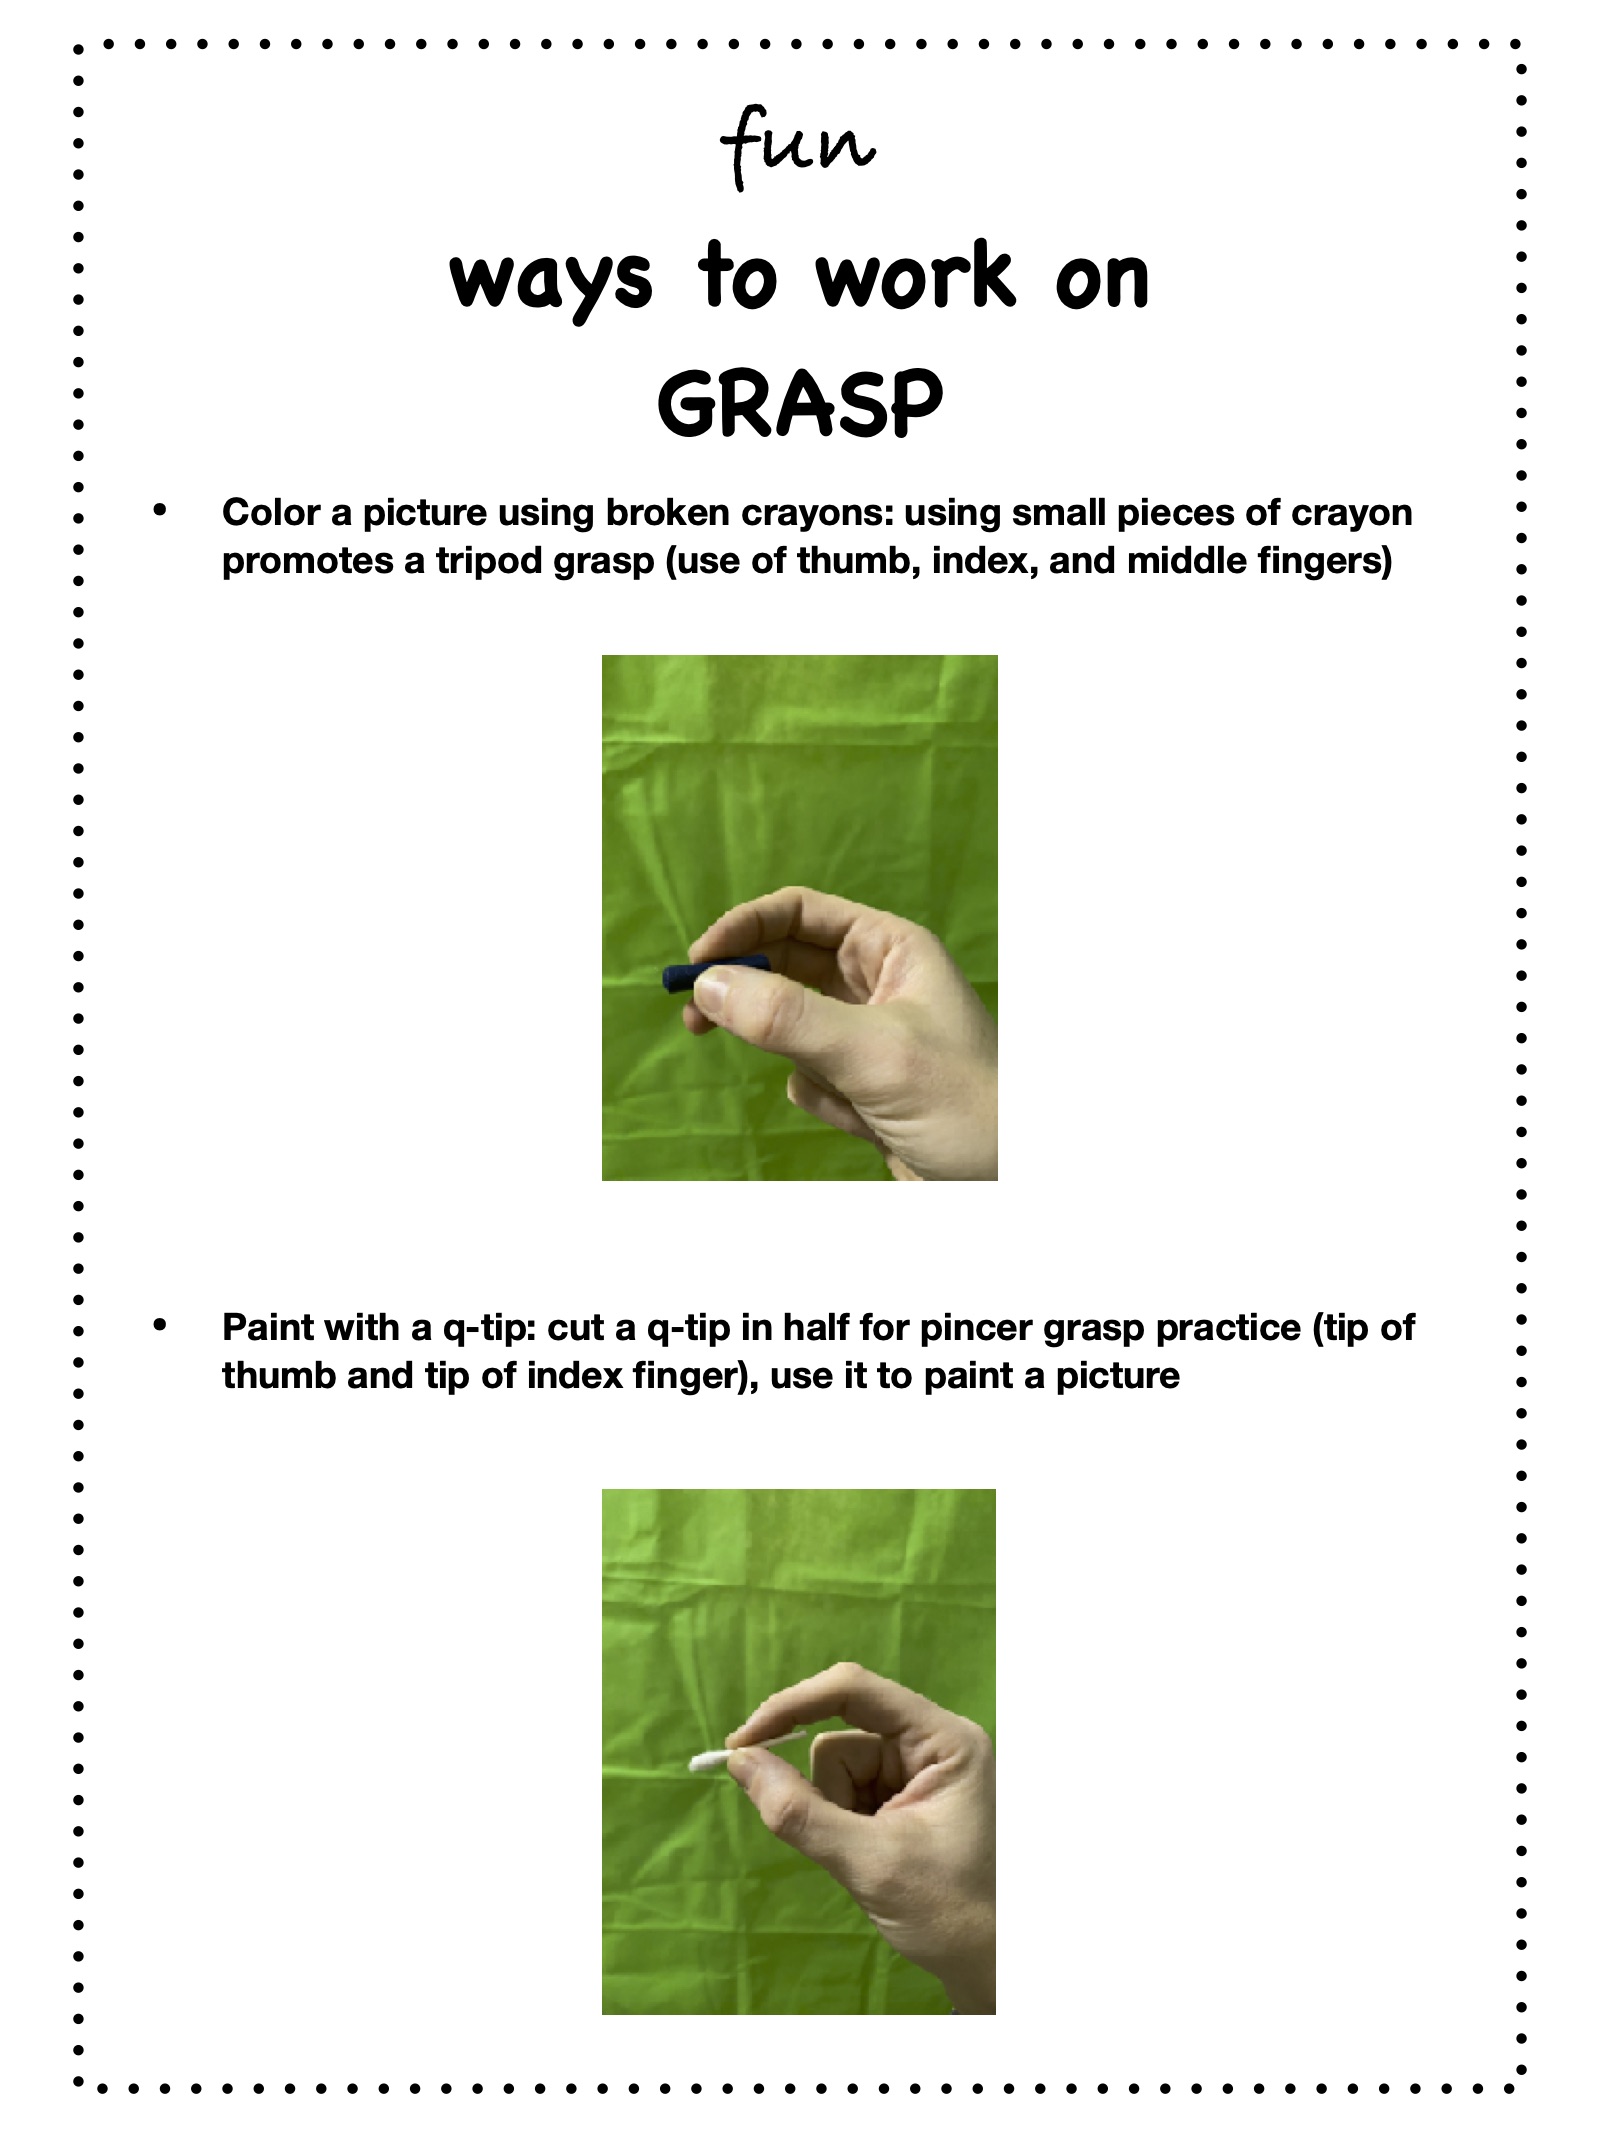 Fun Ways to Work On Grasp image